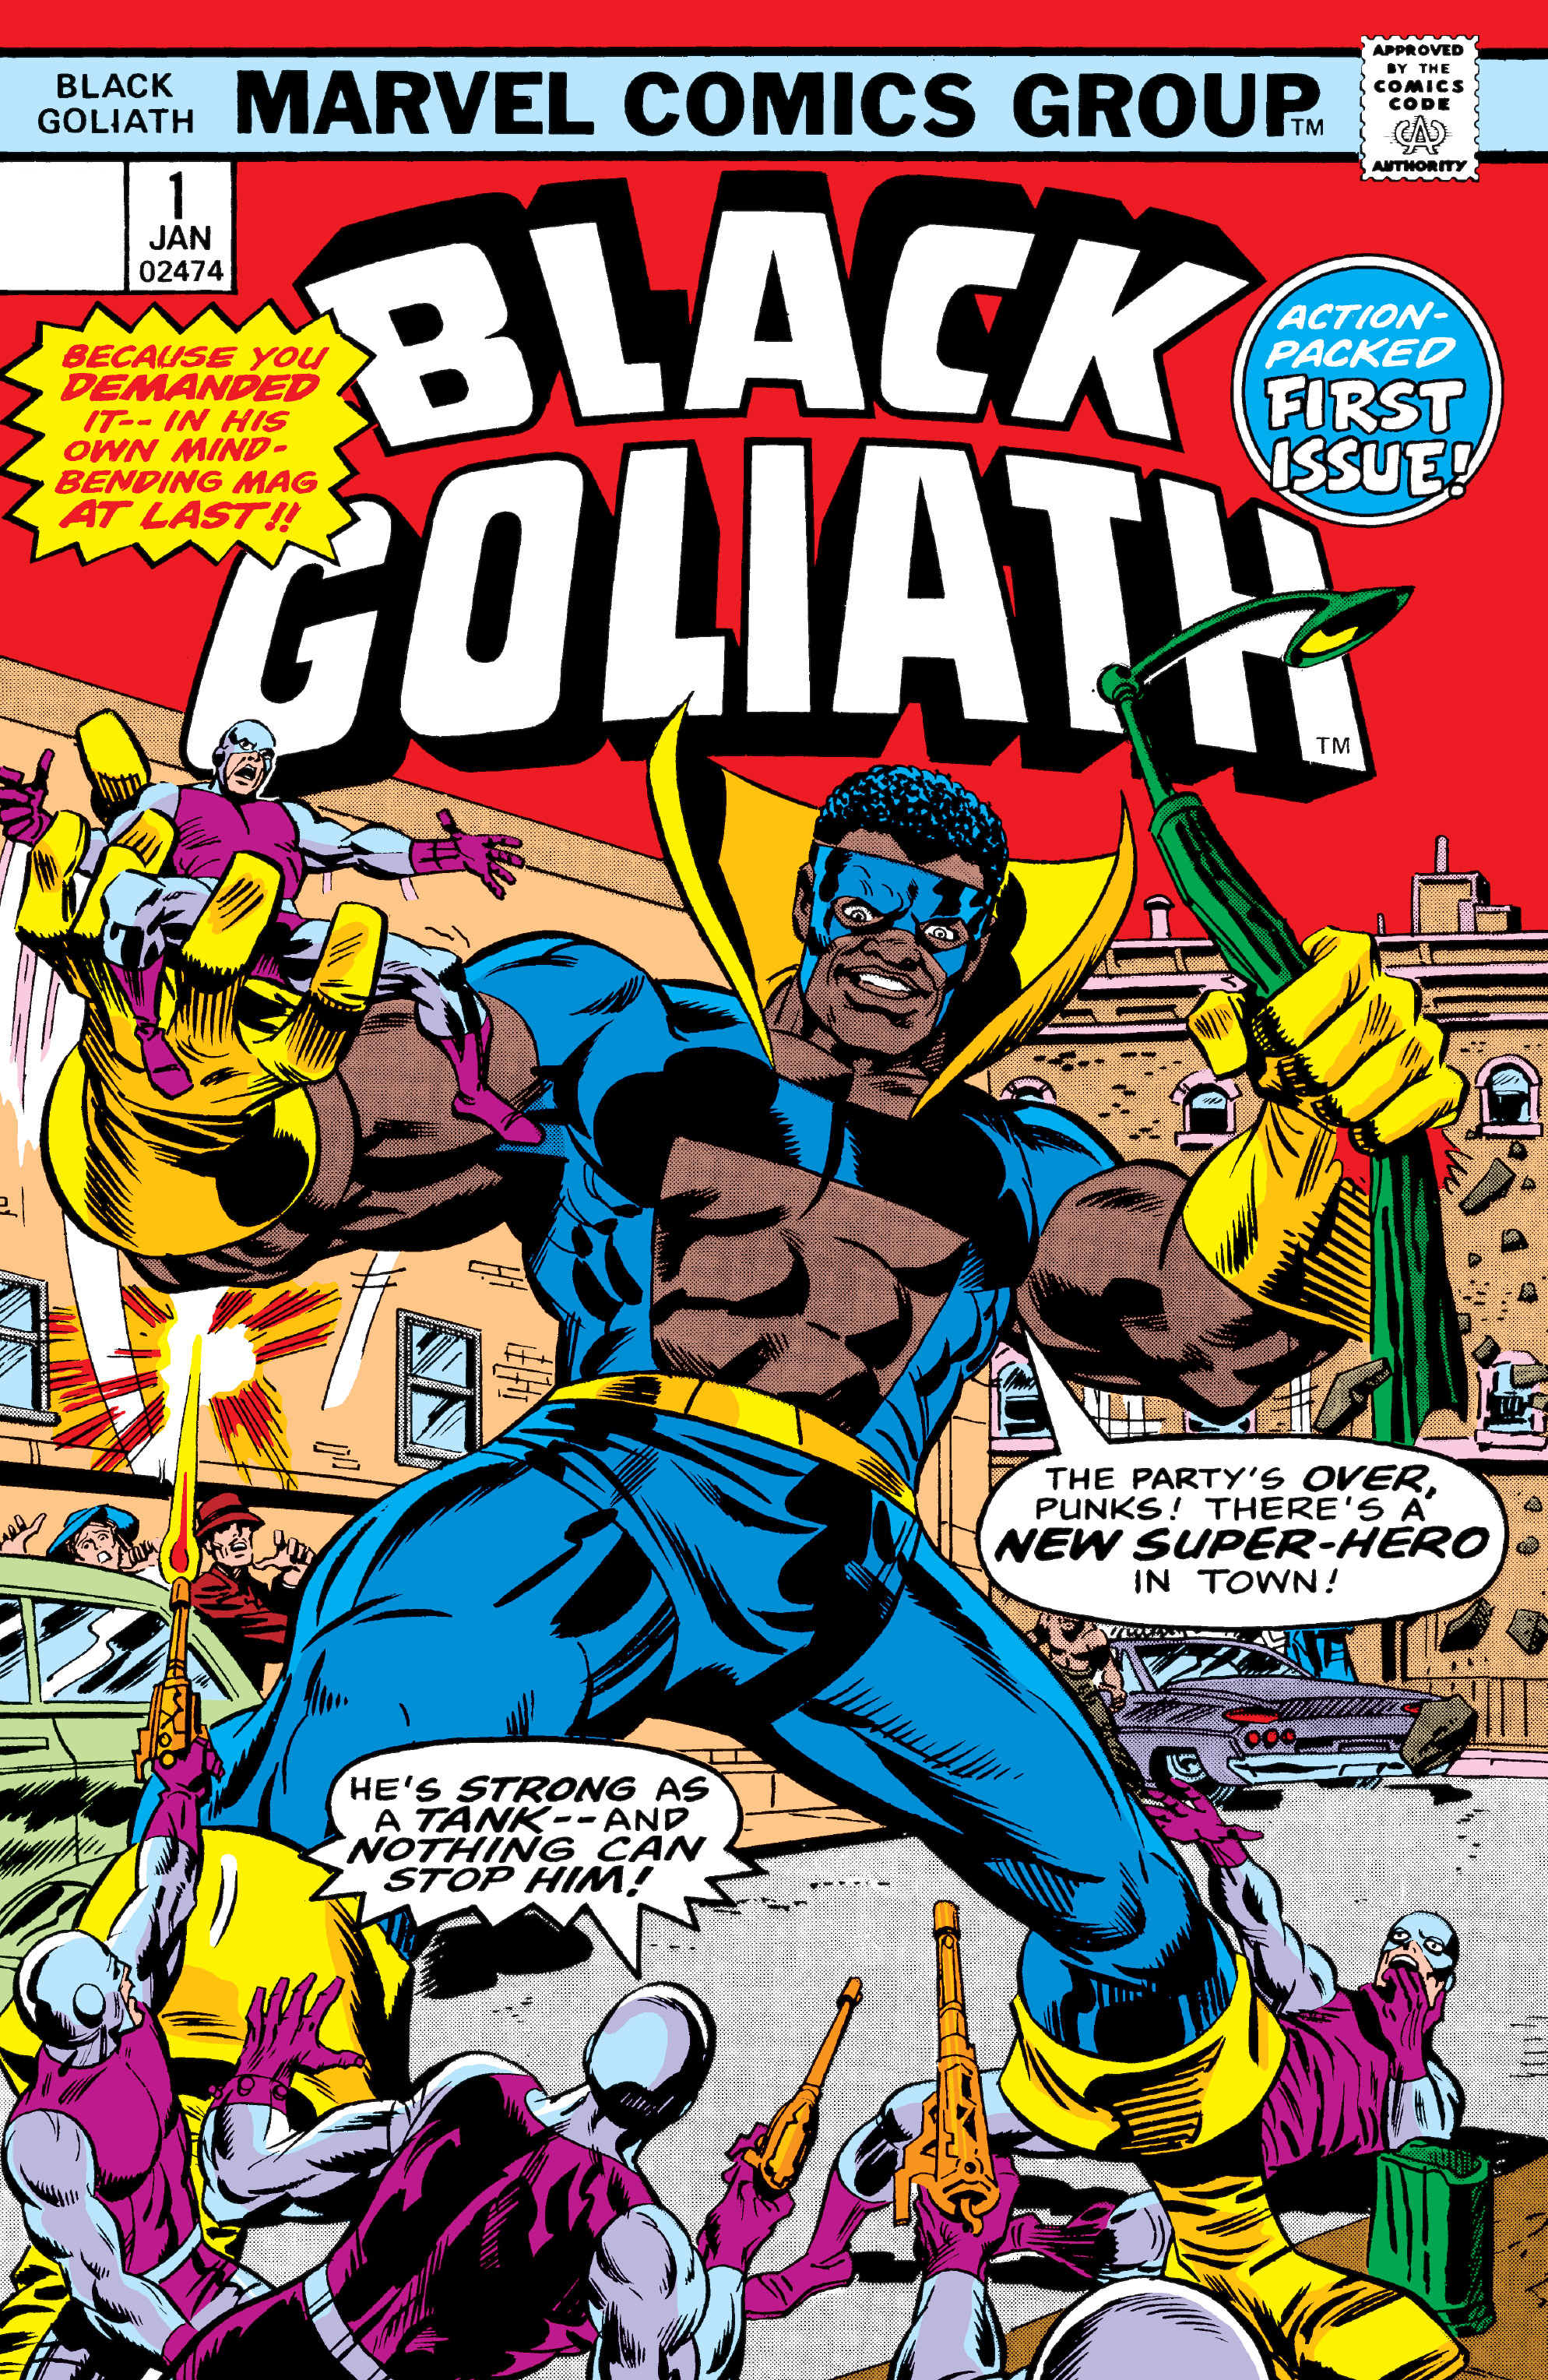 Read online Black Goliath comic -  Issue #1 - 1